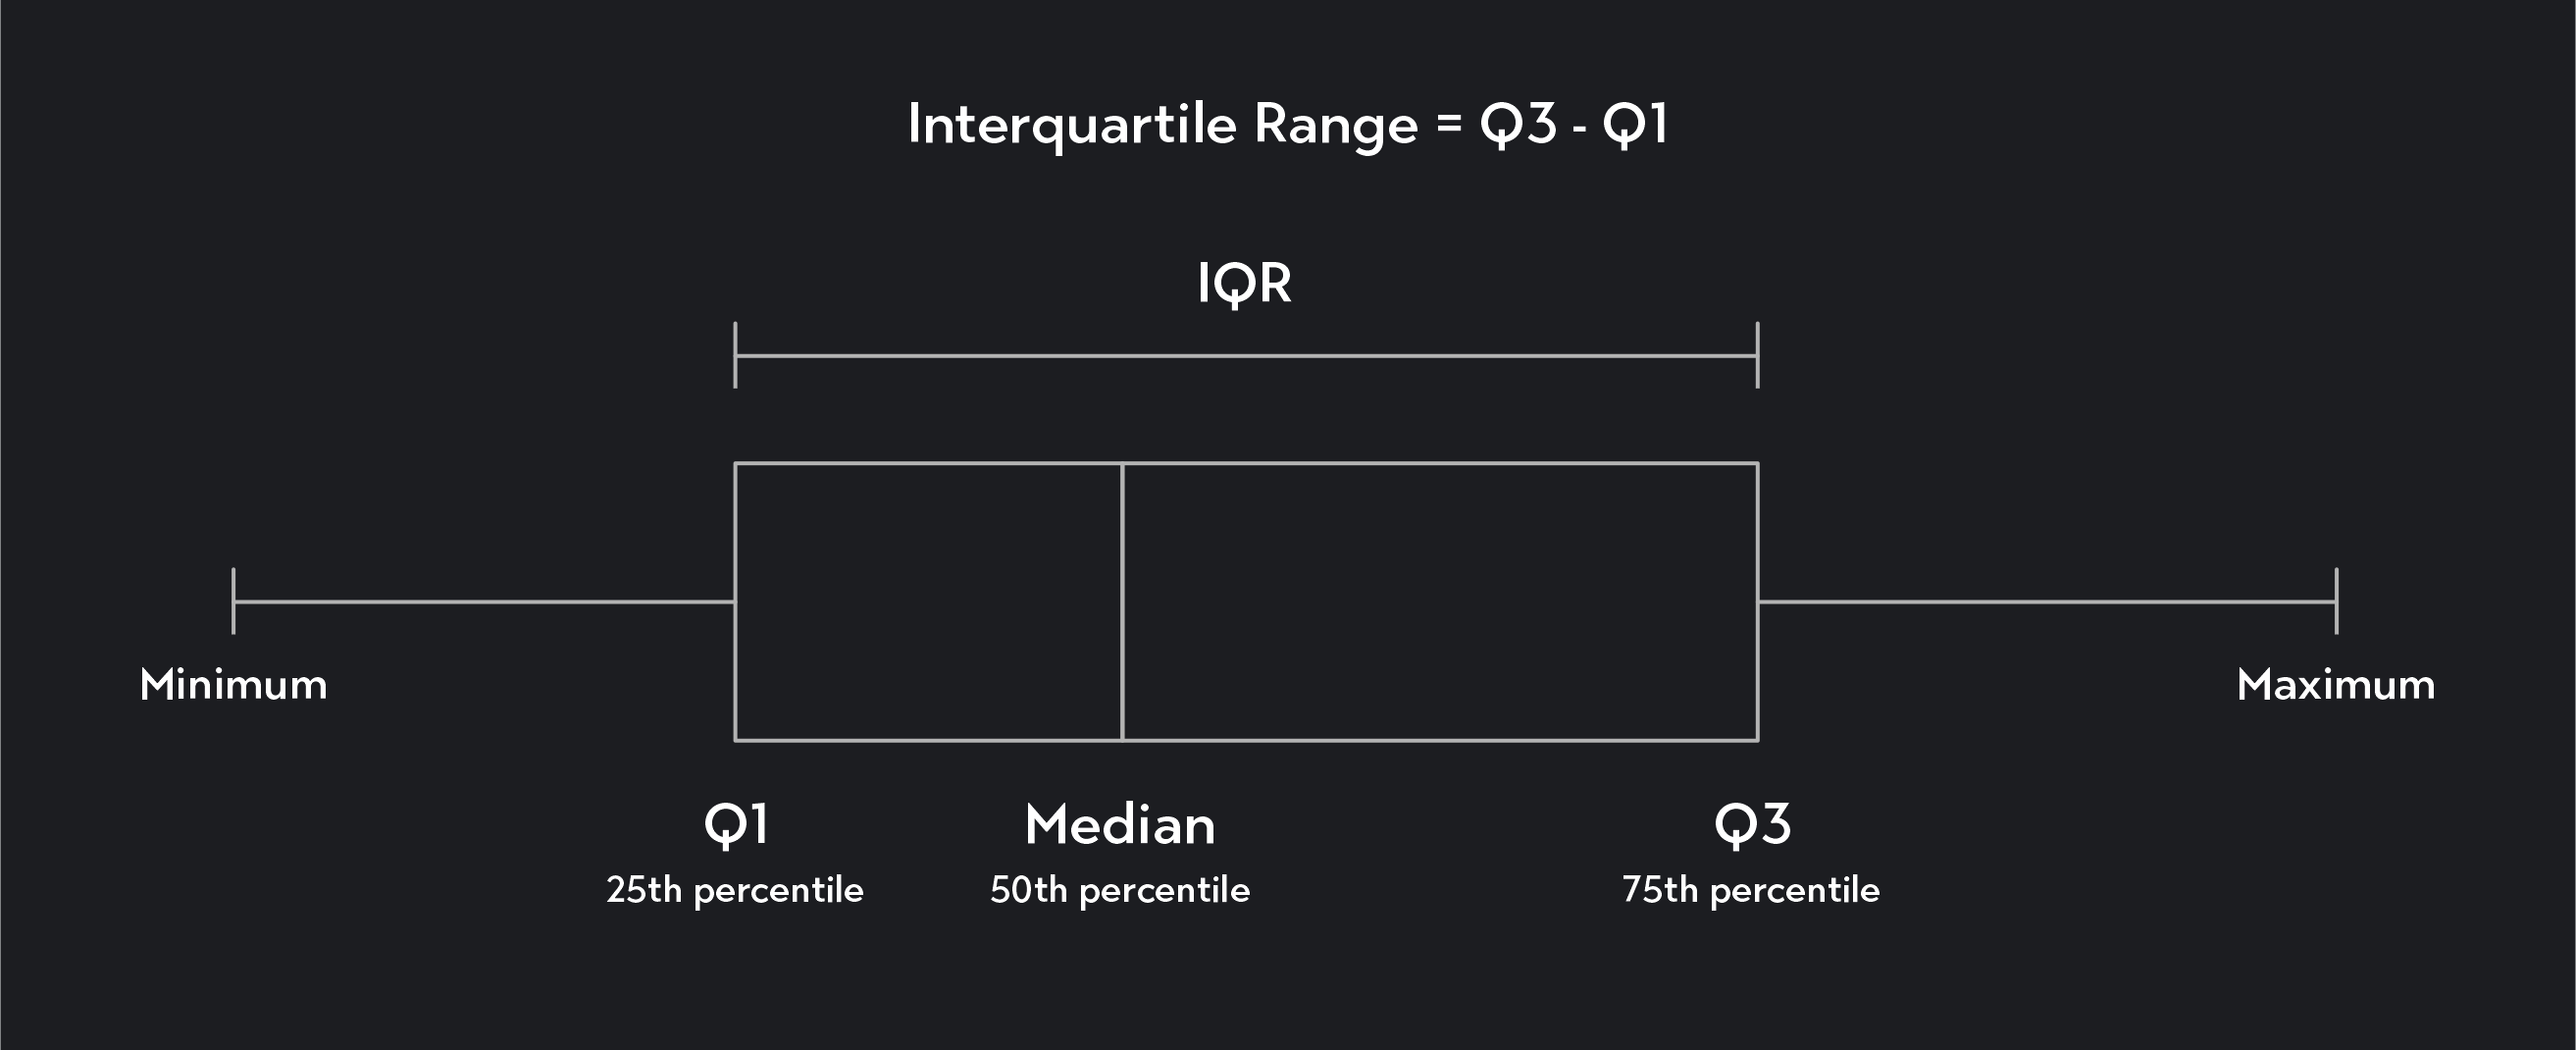 interquartile range definition